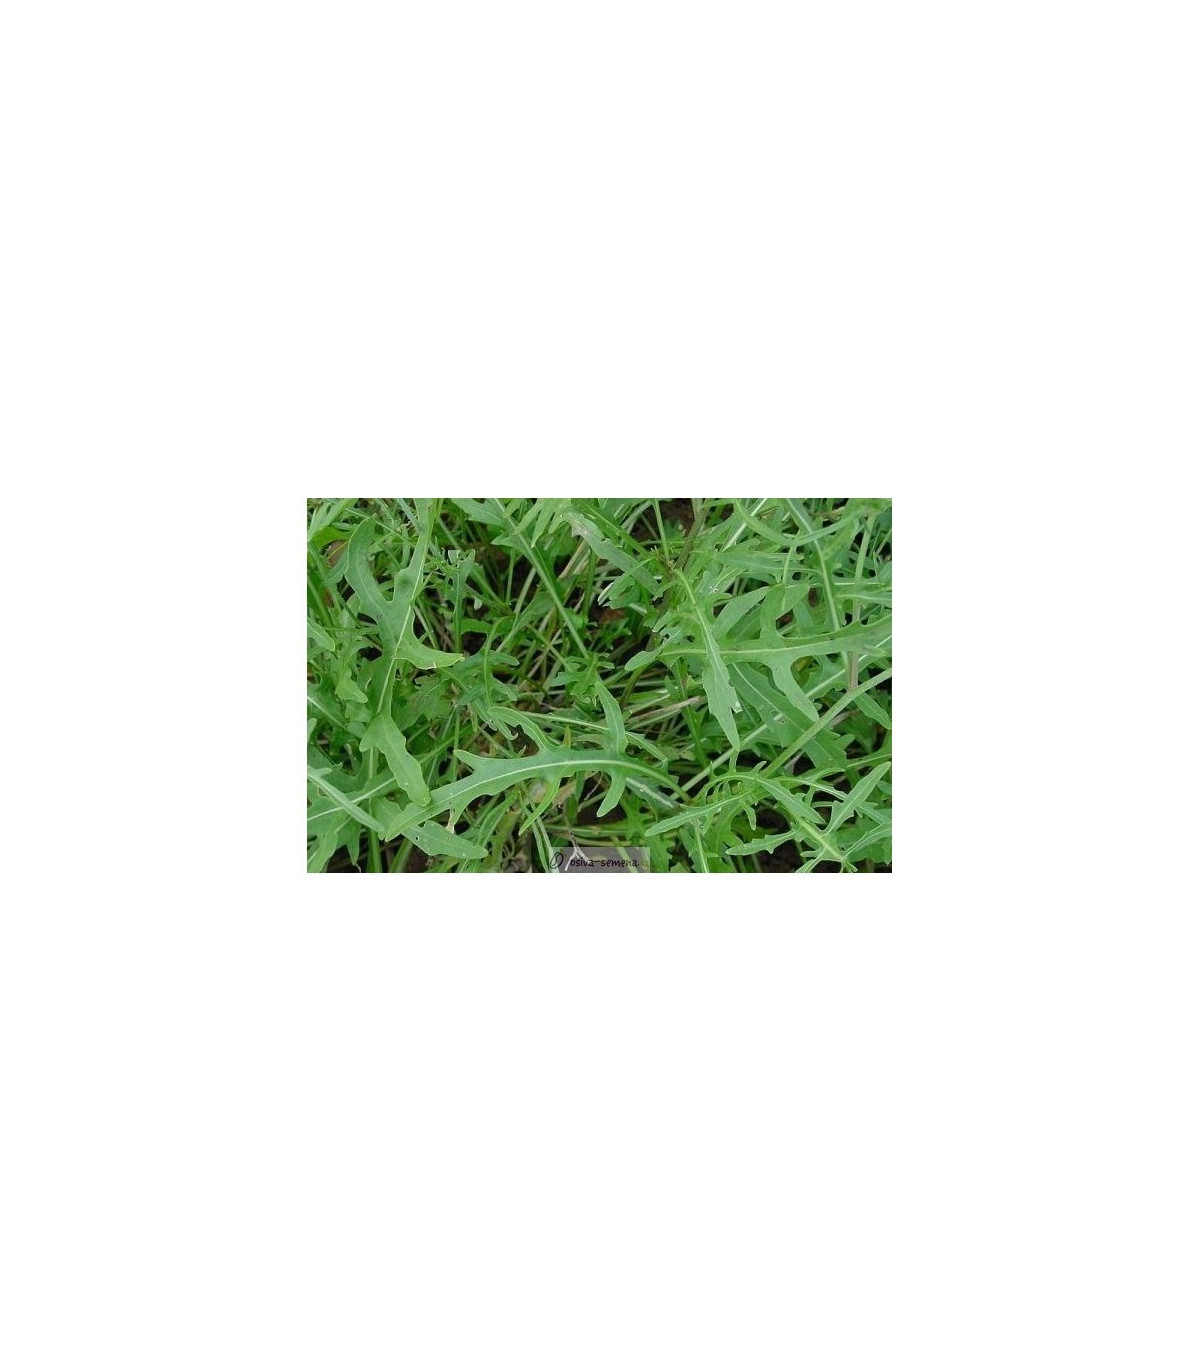 BIO Rukola Roma - Diplotaxis tenuifolia - semená rukoly - semiačka - 50 ks